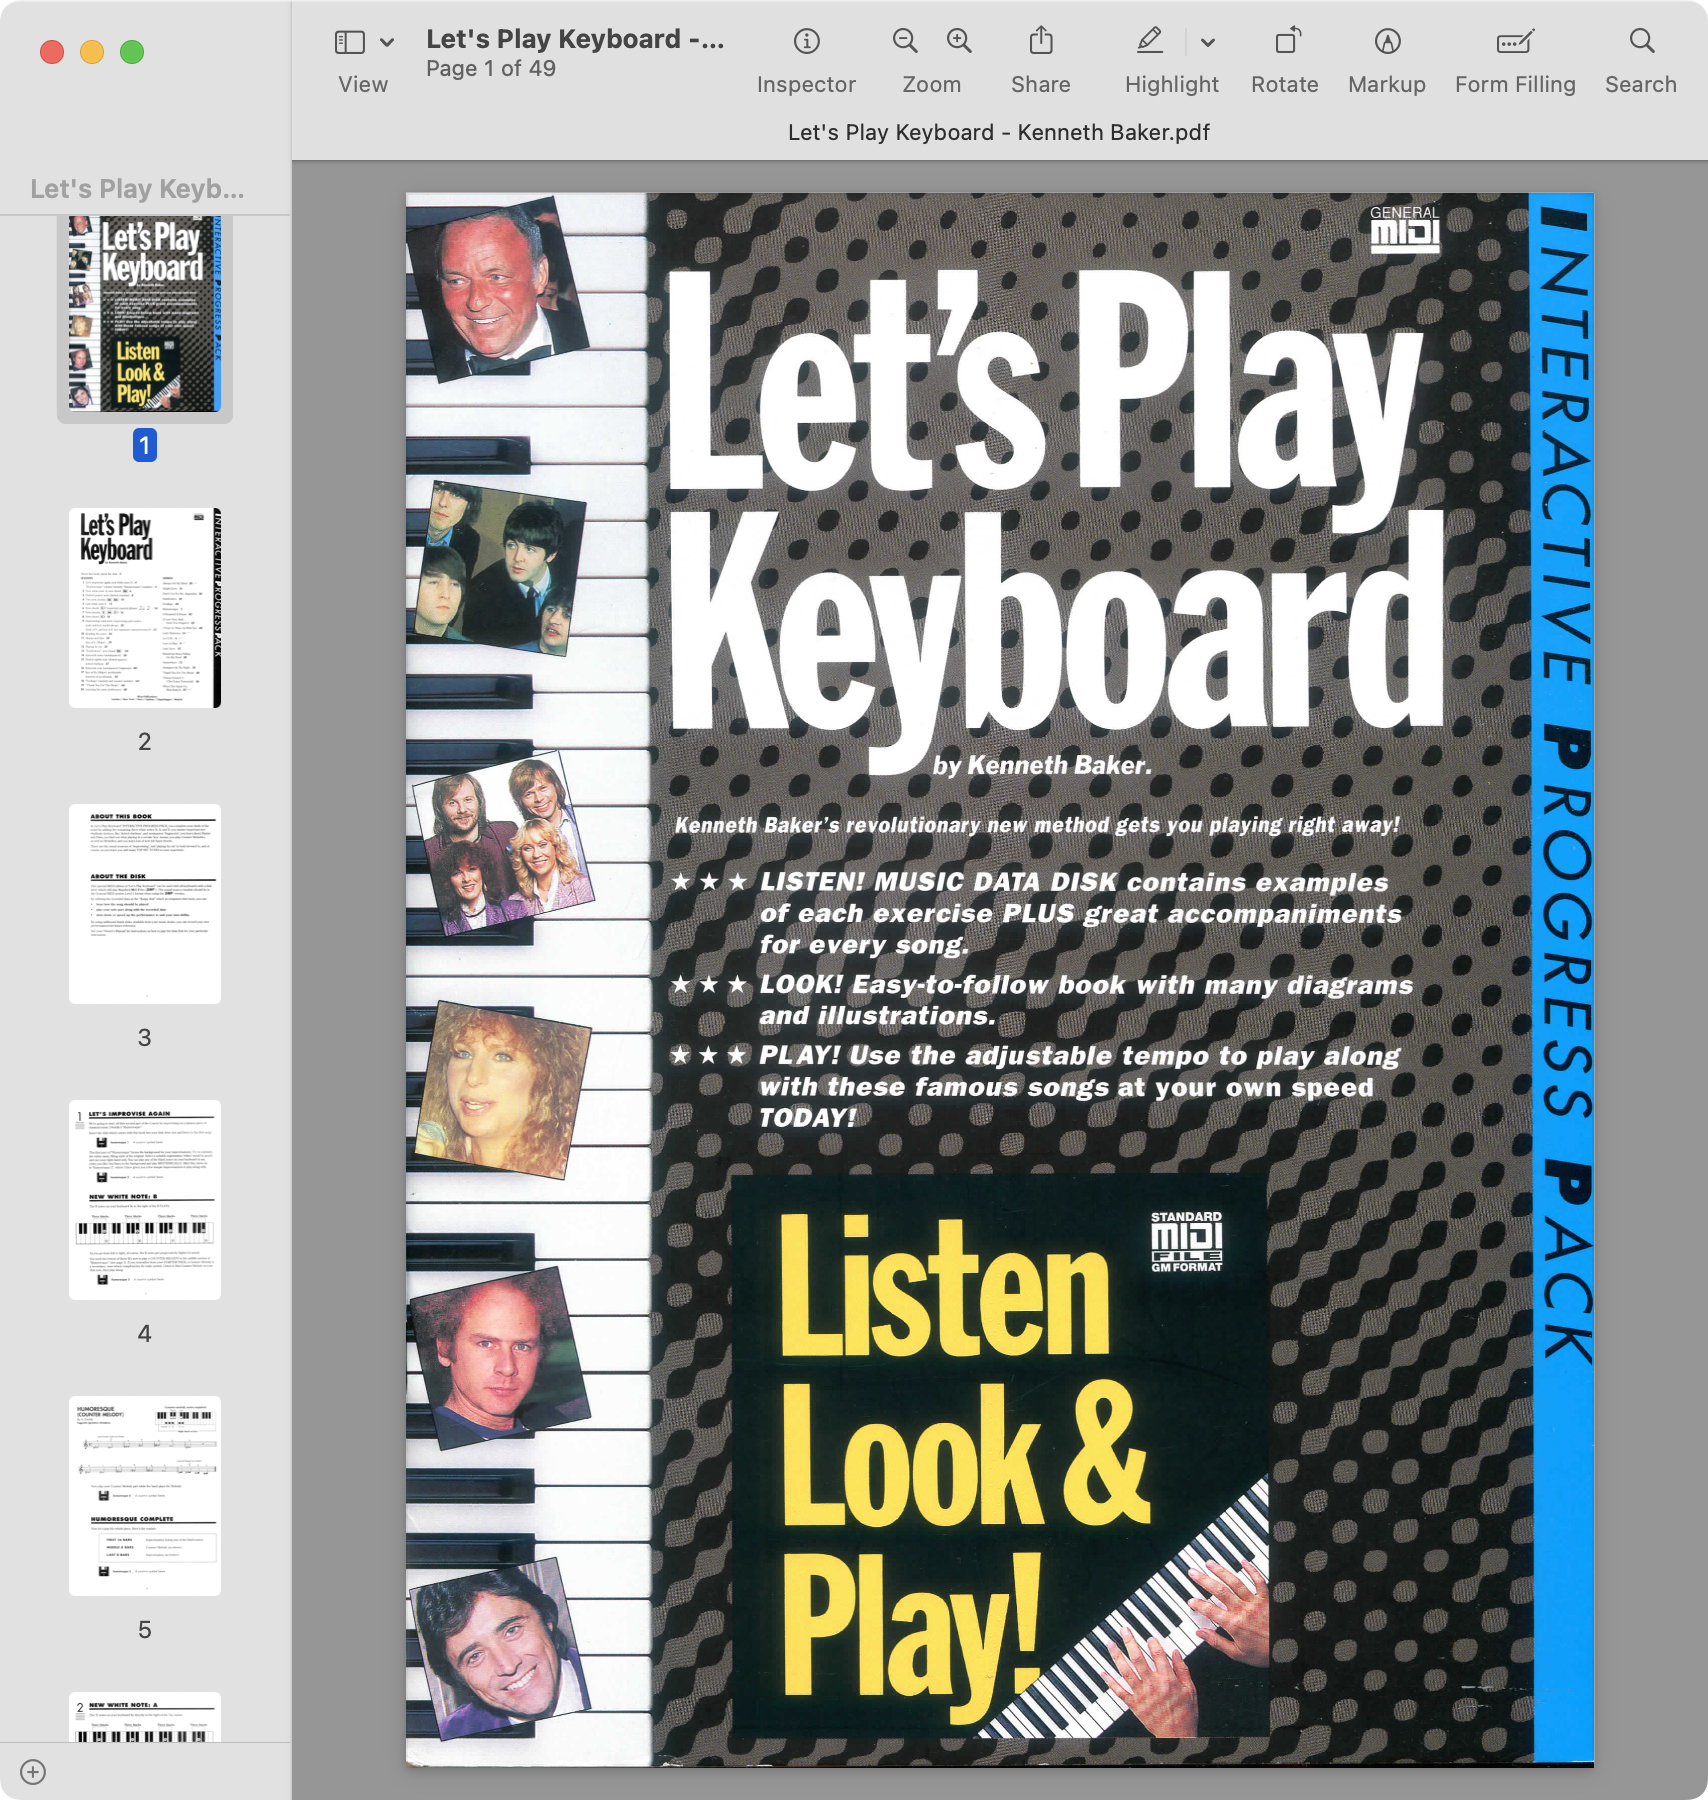 Let's Play Keyboard - Kenneth Baker.jpg